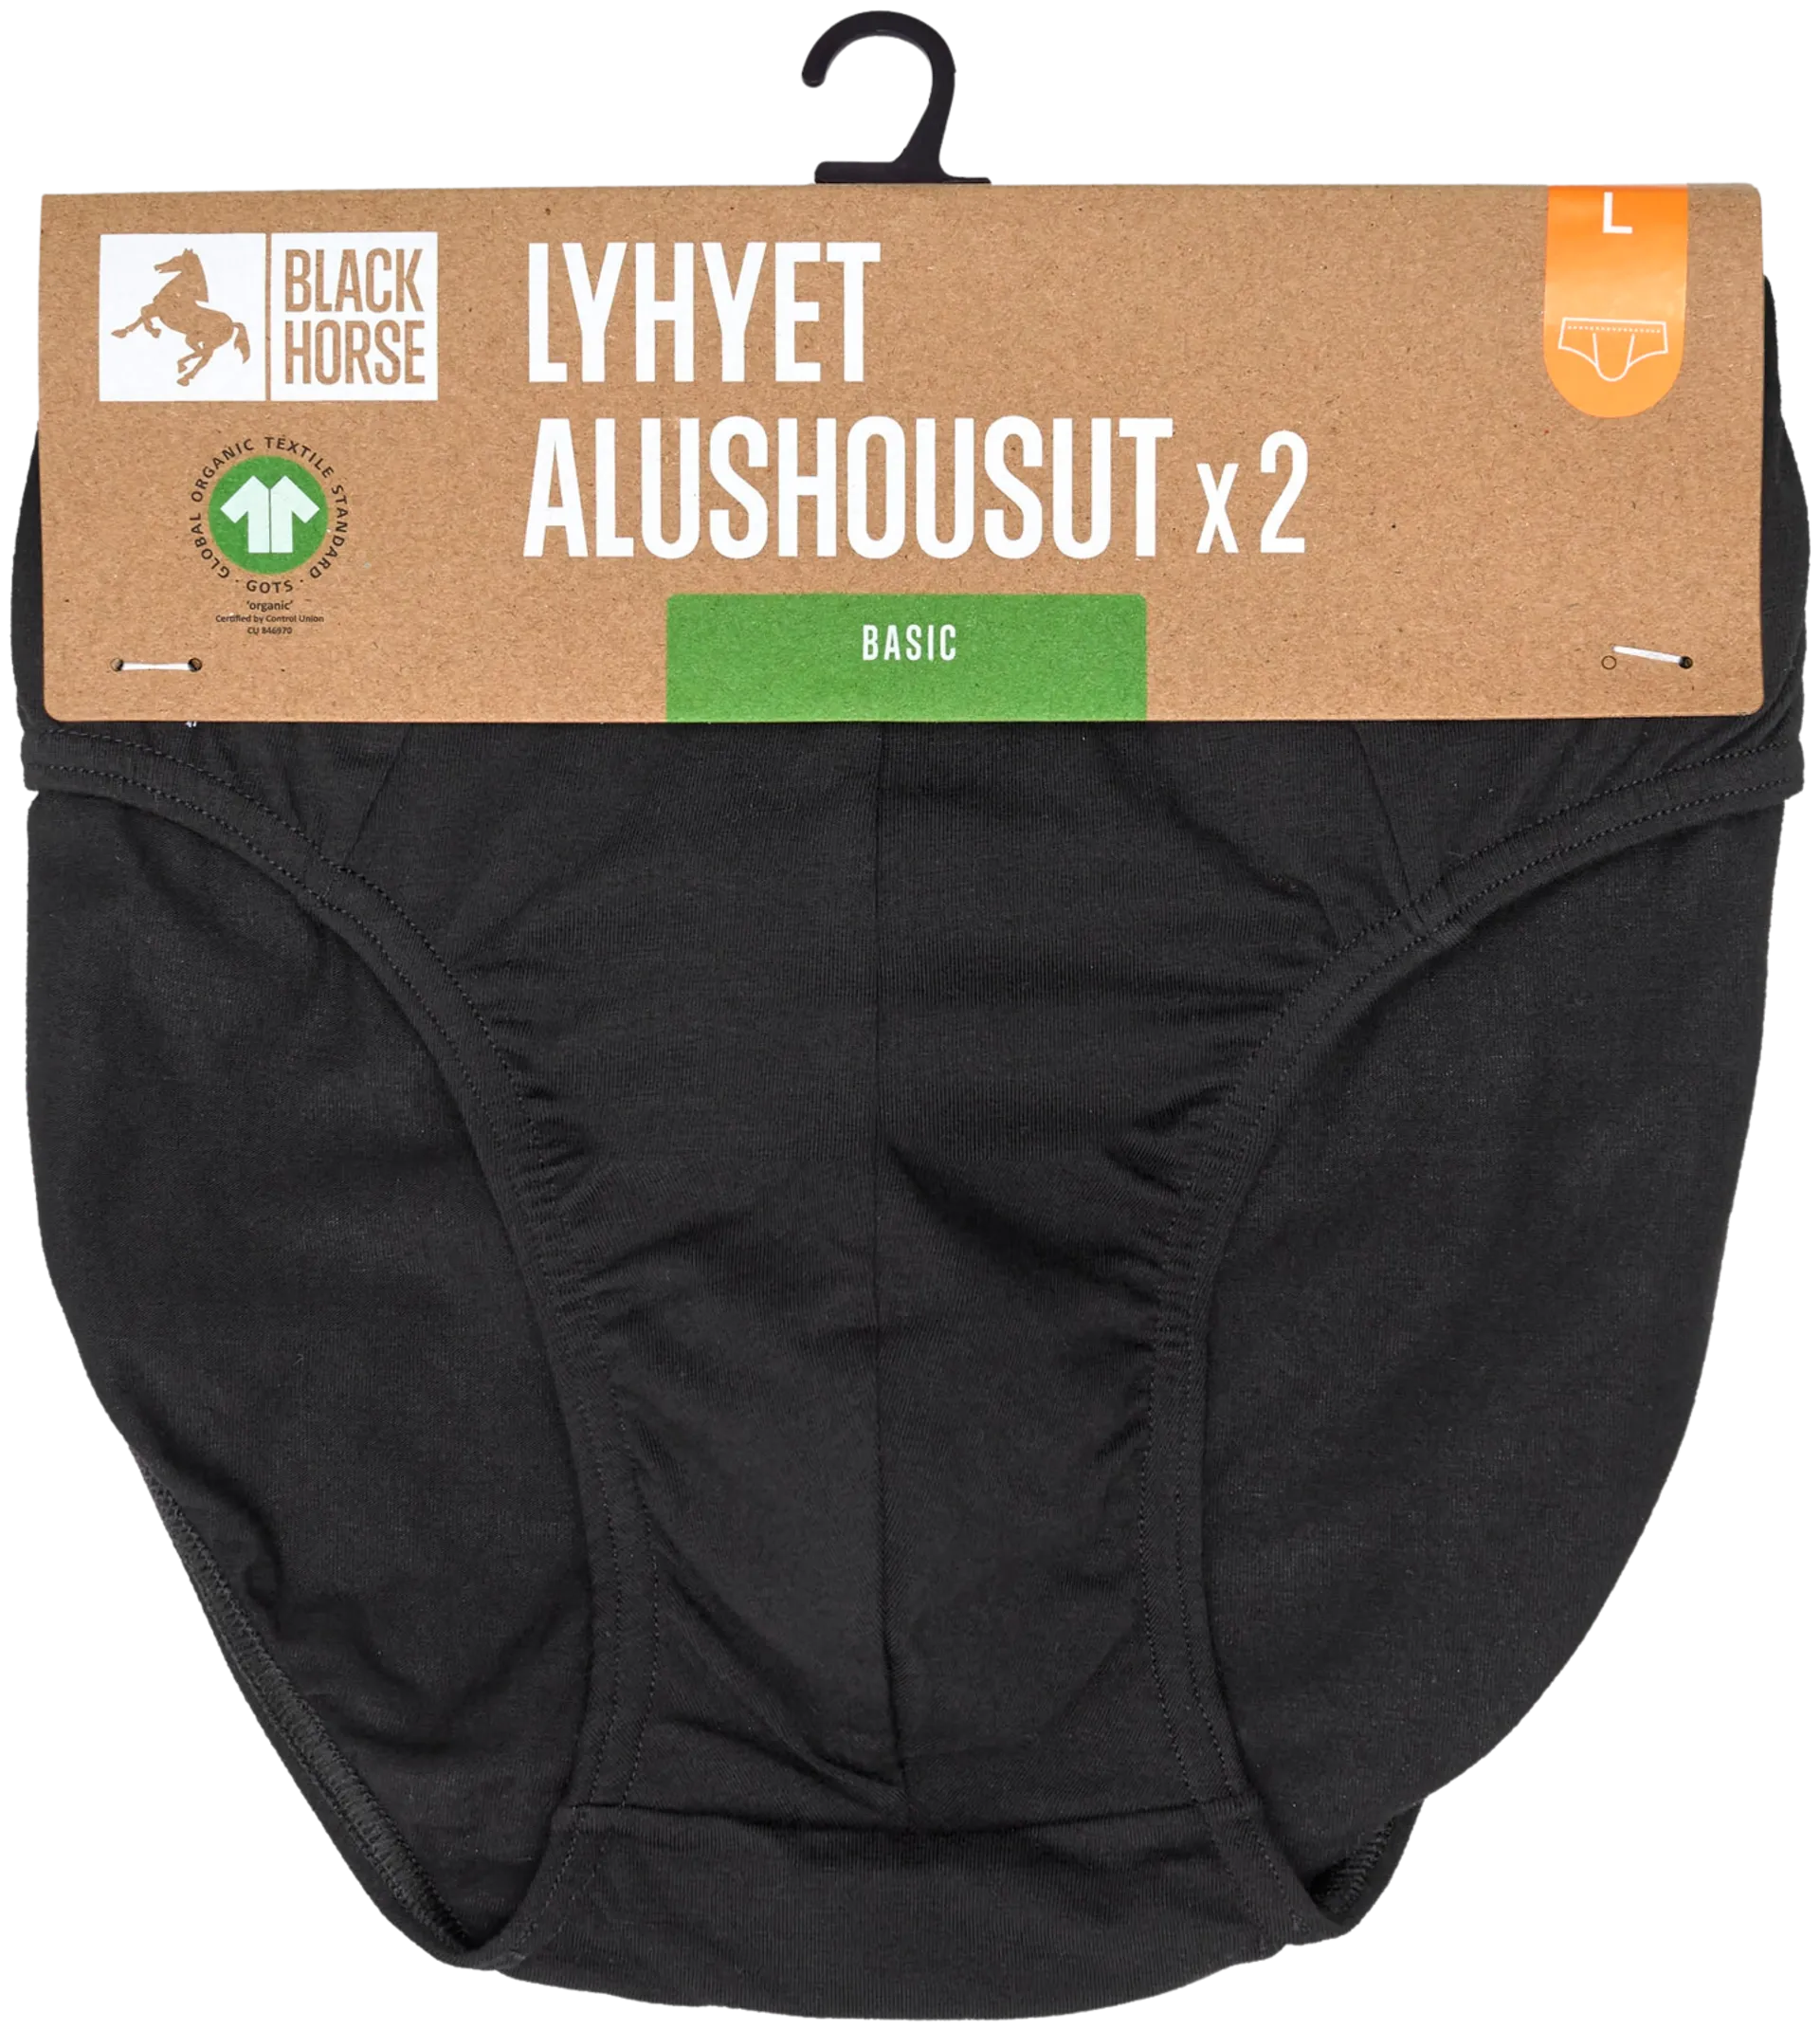 Black Horse miesten lyhyet alushousut Basic 2-pack - MUSTA - 2